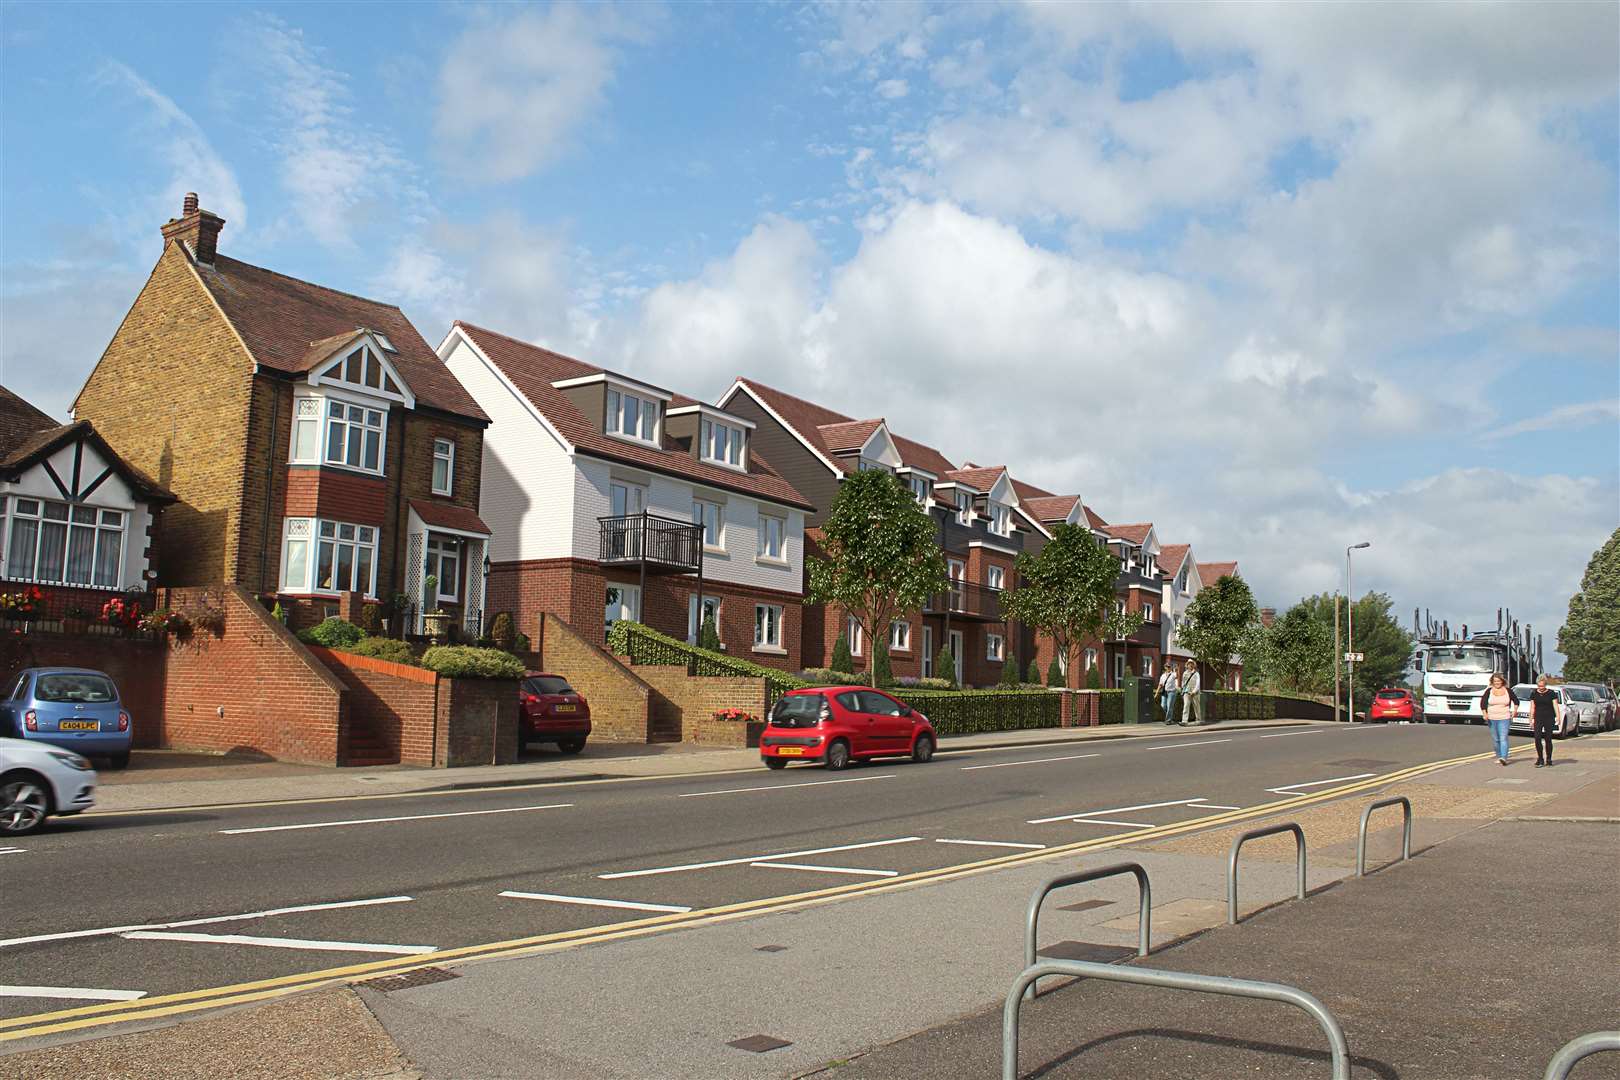 Churchill Retirement Living's new development in Rainham will contain 54 flats